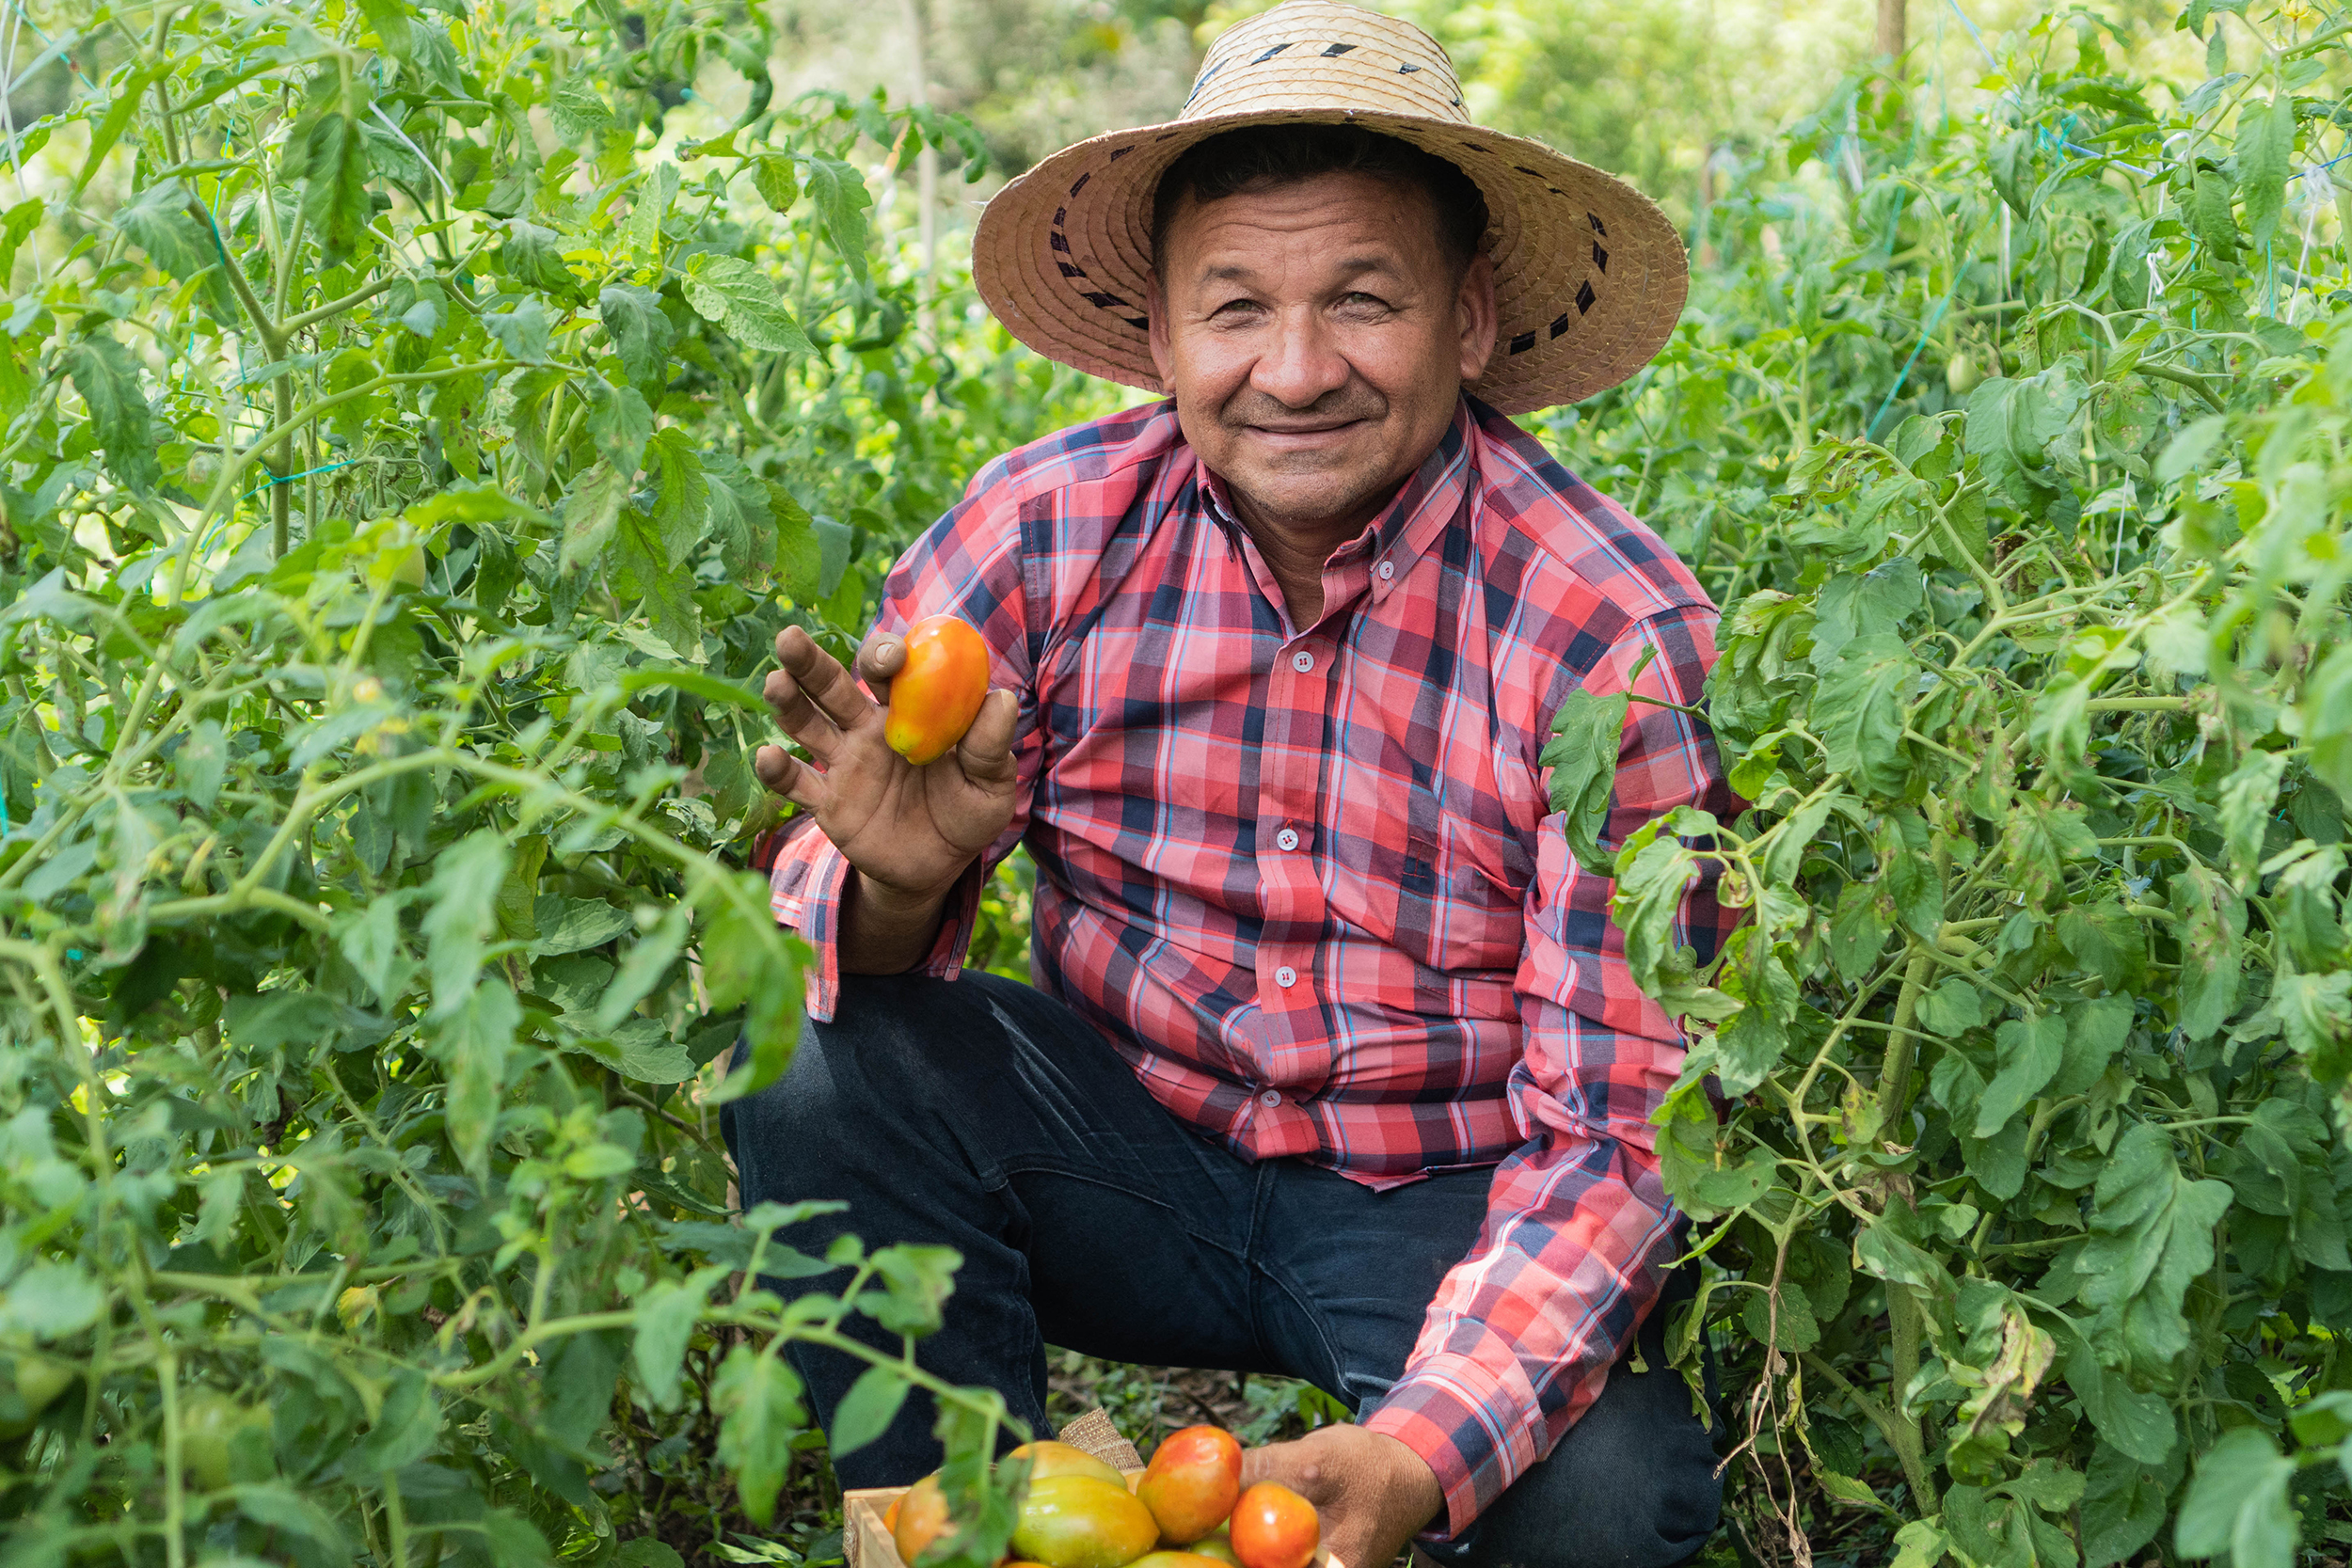 Hispanic farmer inspecting tomatoes in the field